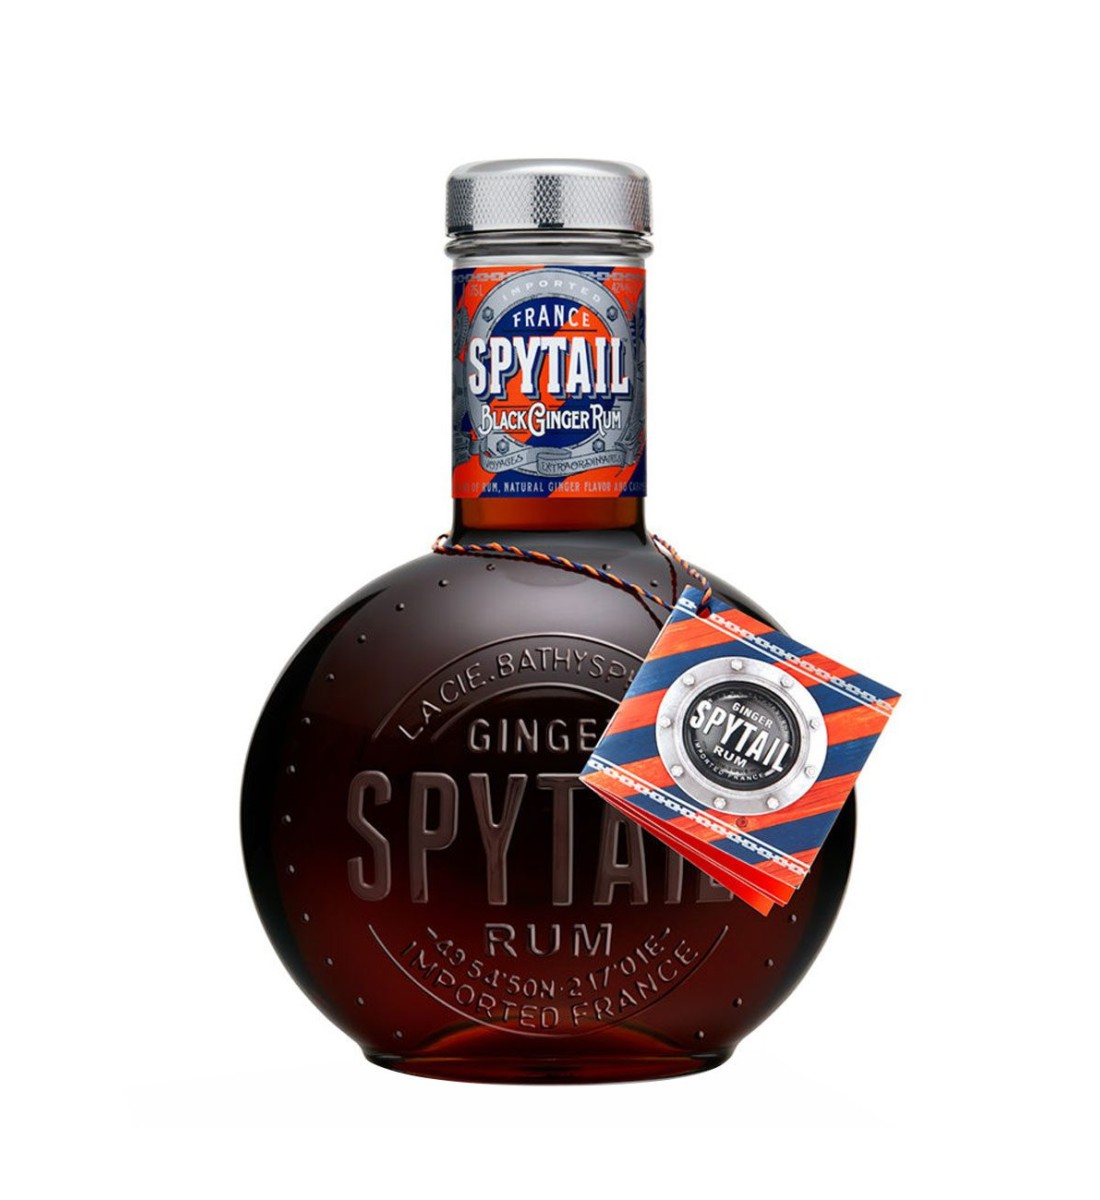 Spytail Black Ginger Rum 1.75L